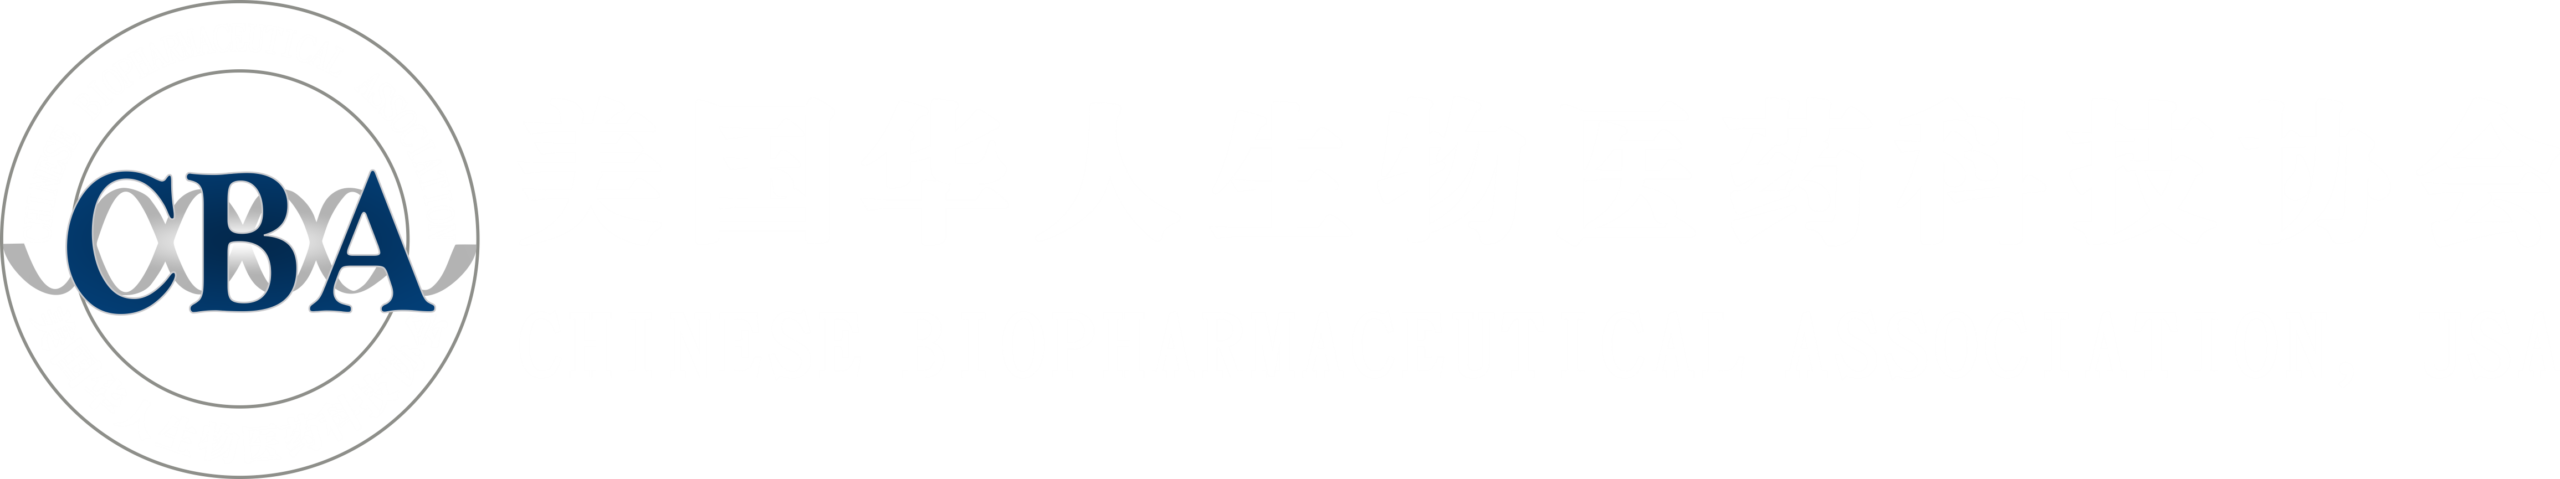 Chinese Biopharmaceutical Association, USA (CBA)